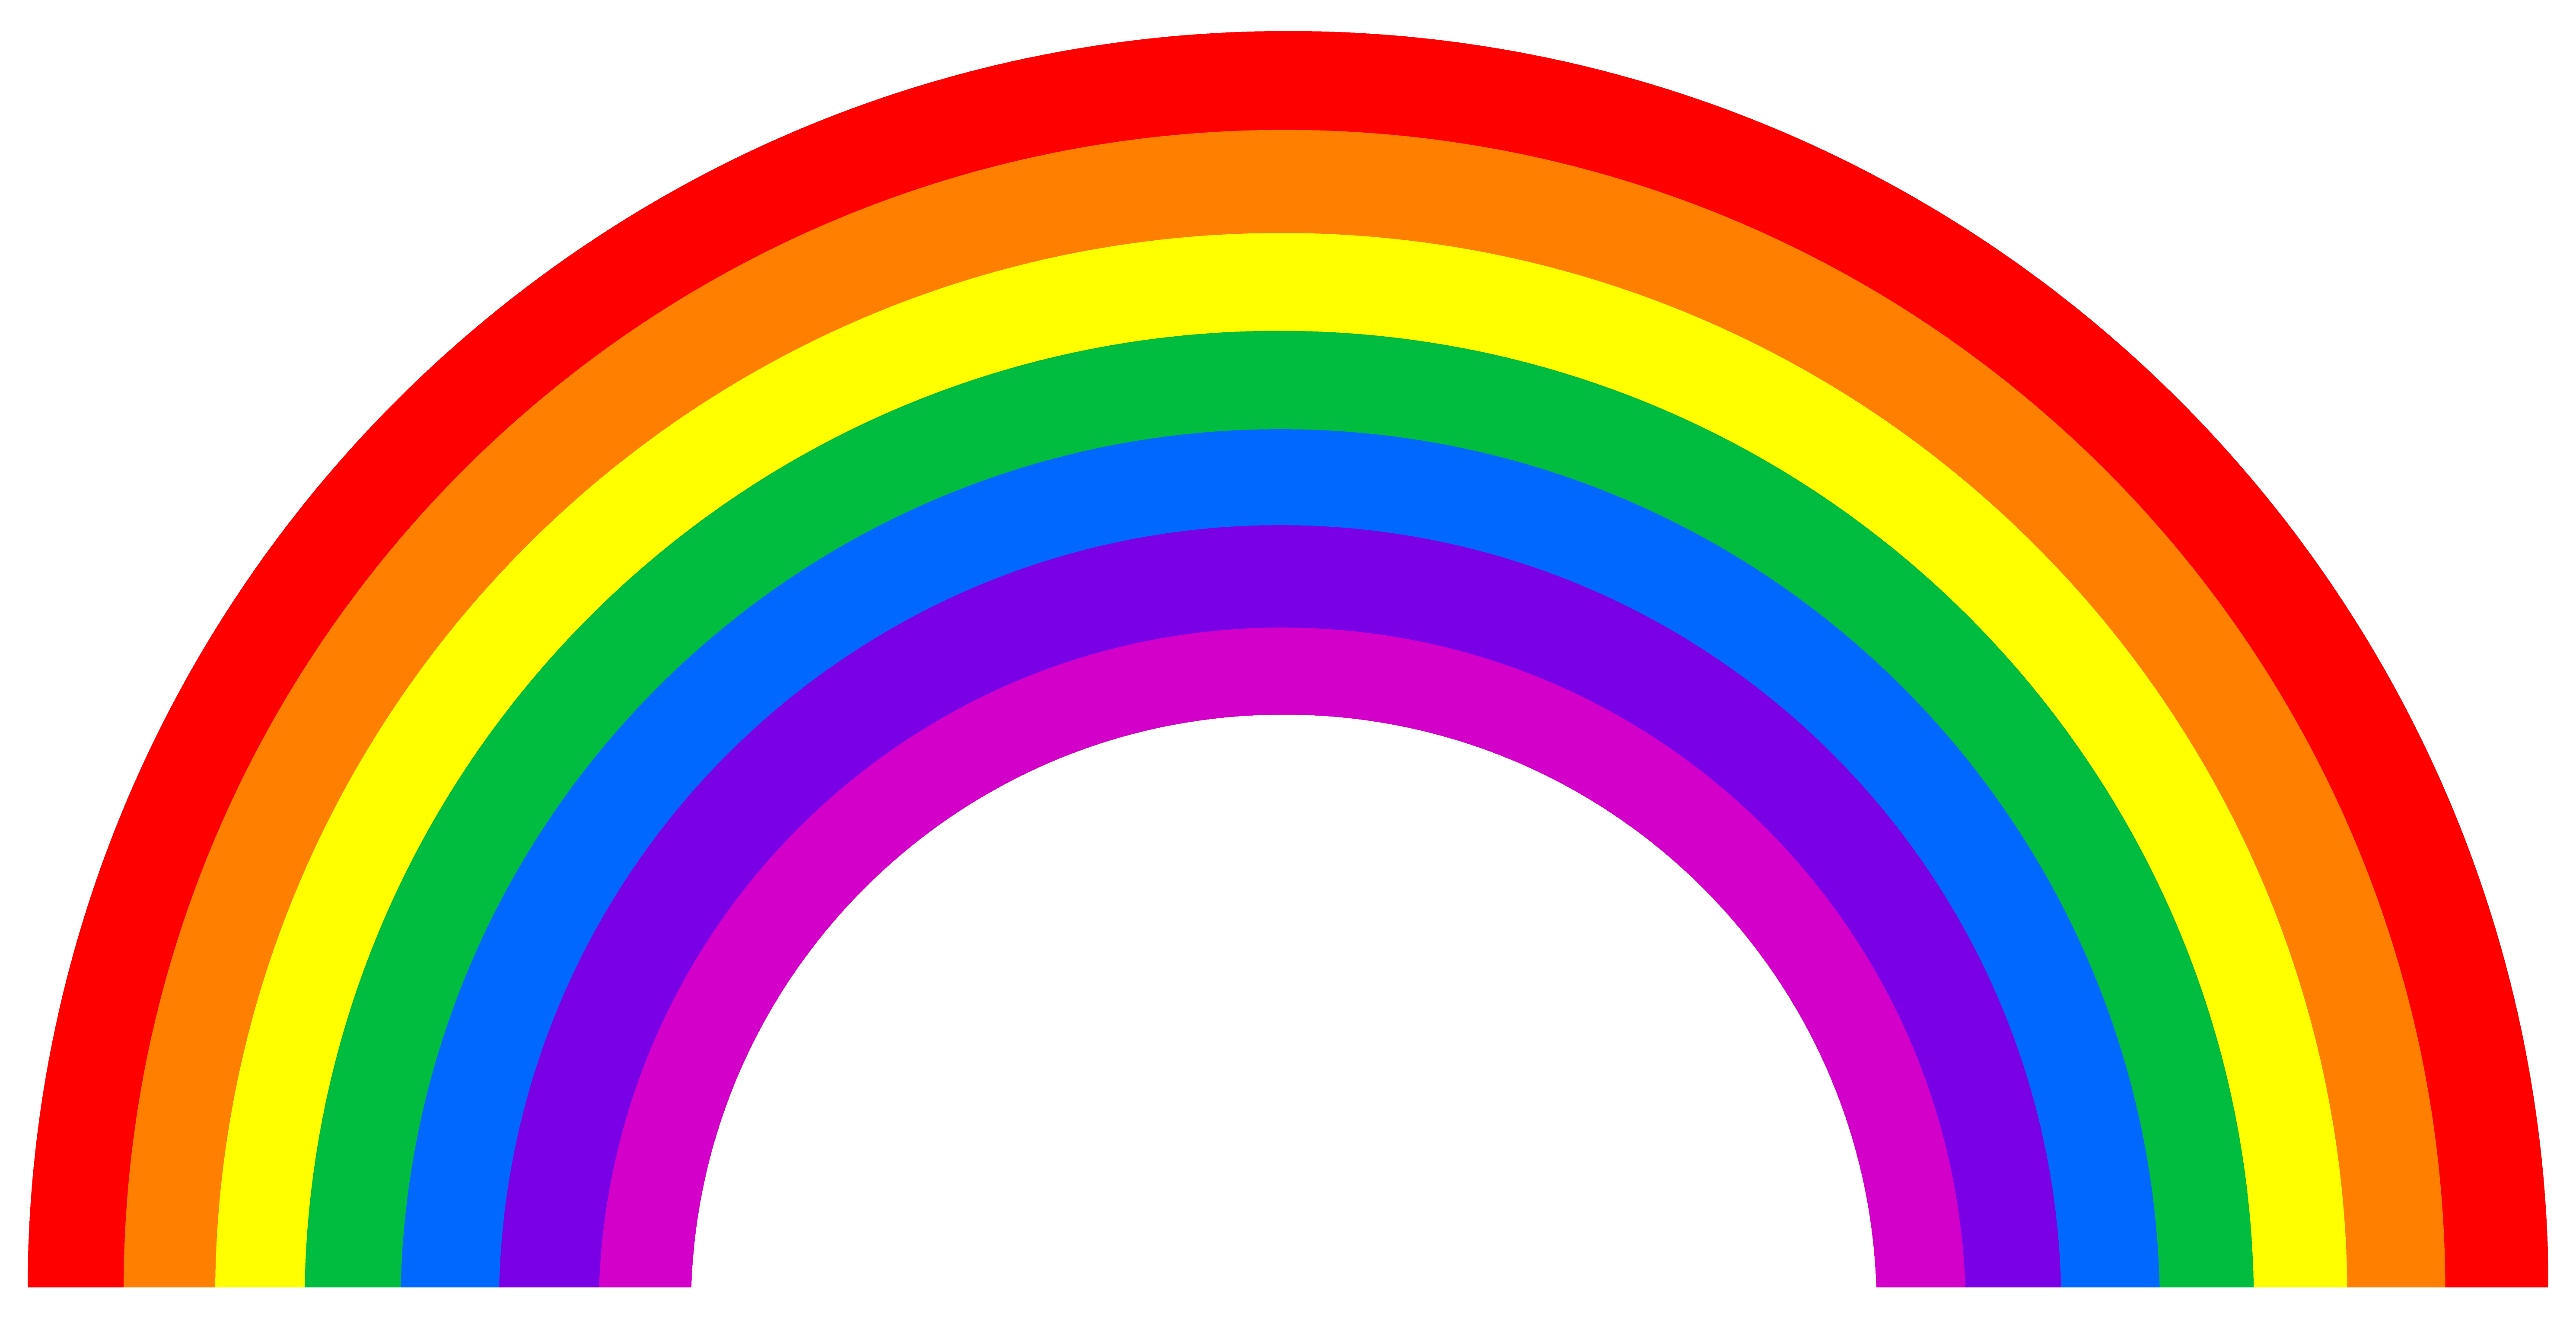 resist-the-rainbow-at-your-peril-brett-berk